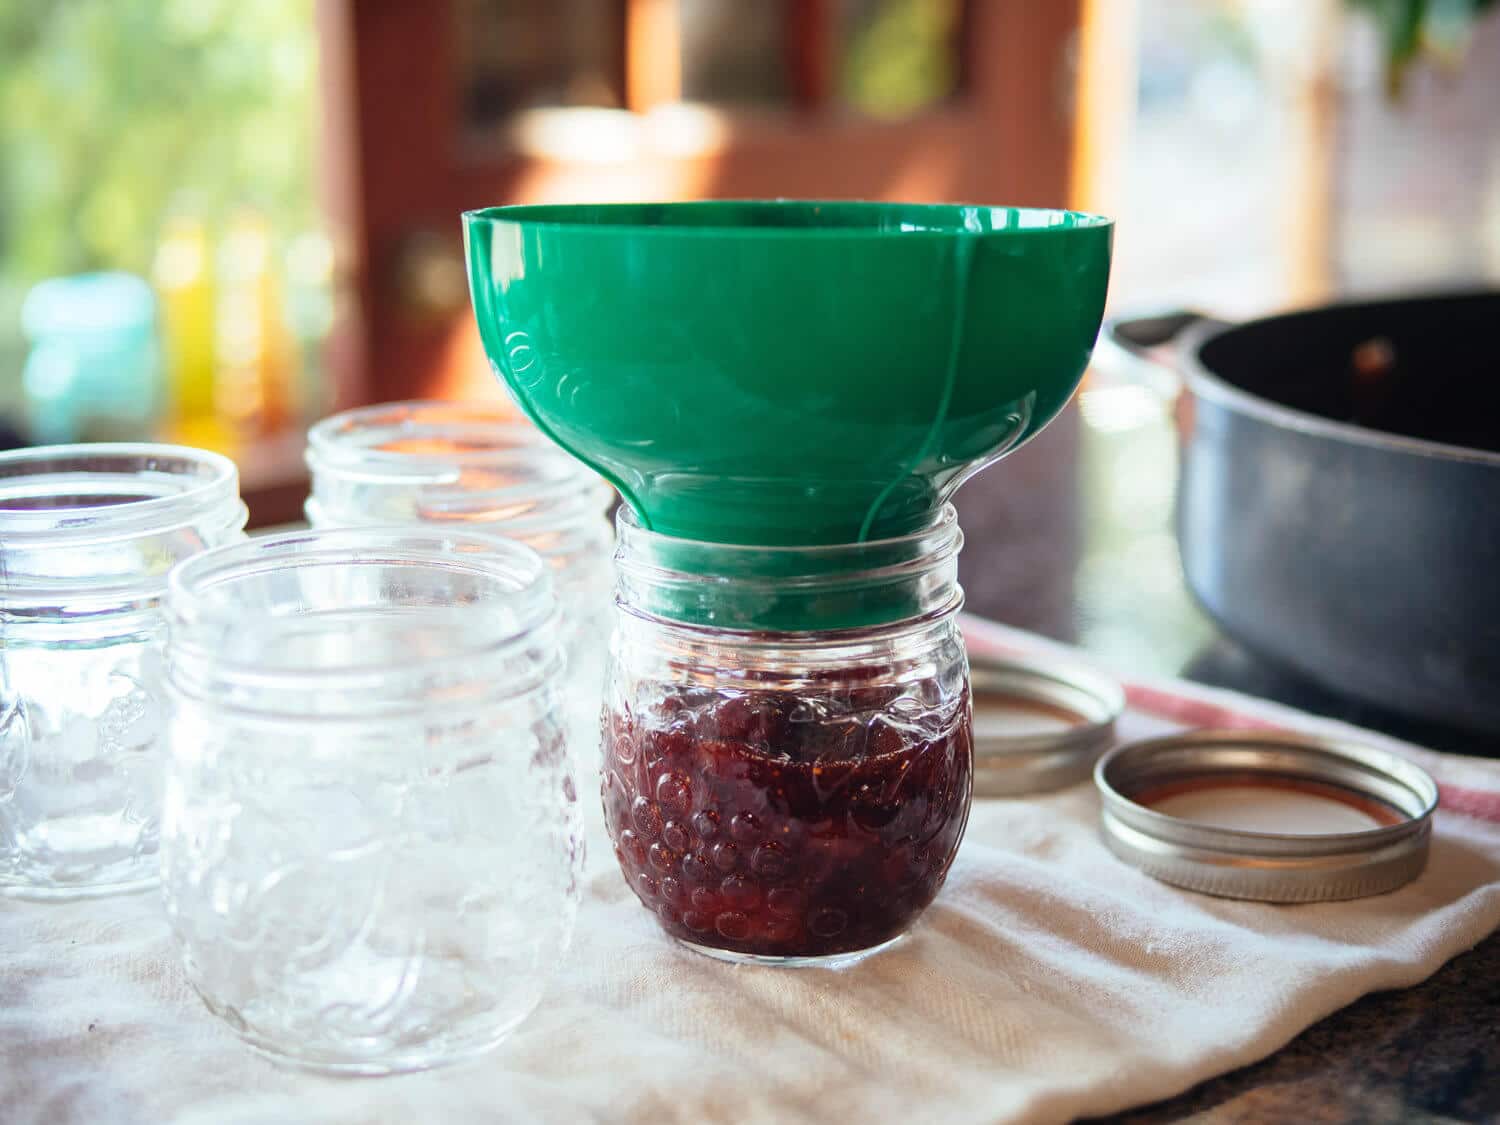 Ladle the jam into your prepared jars